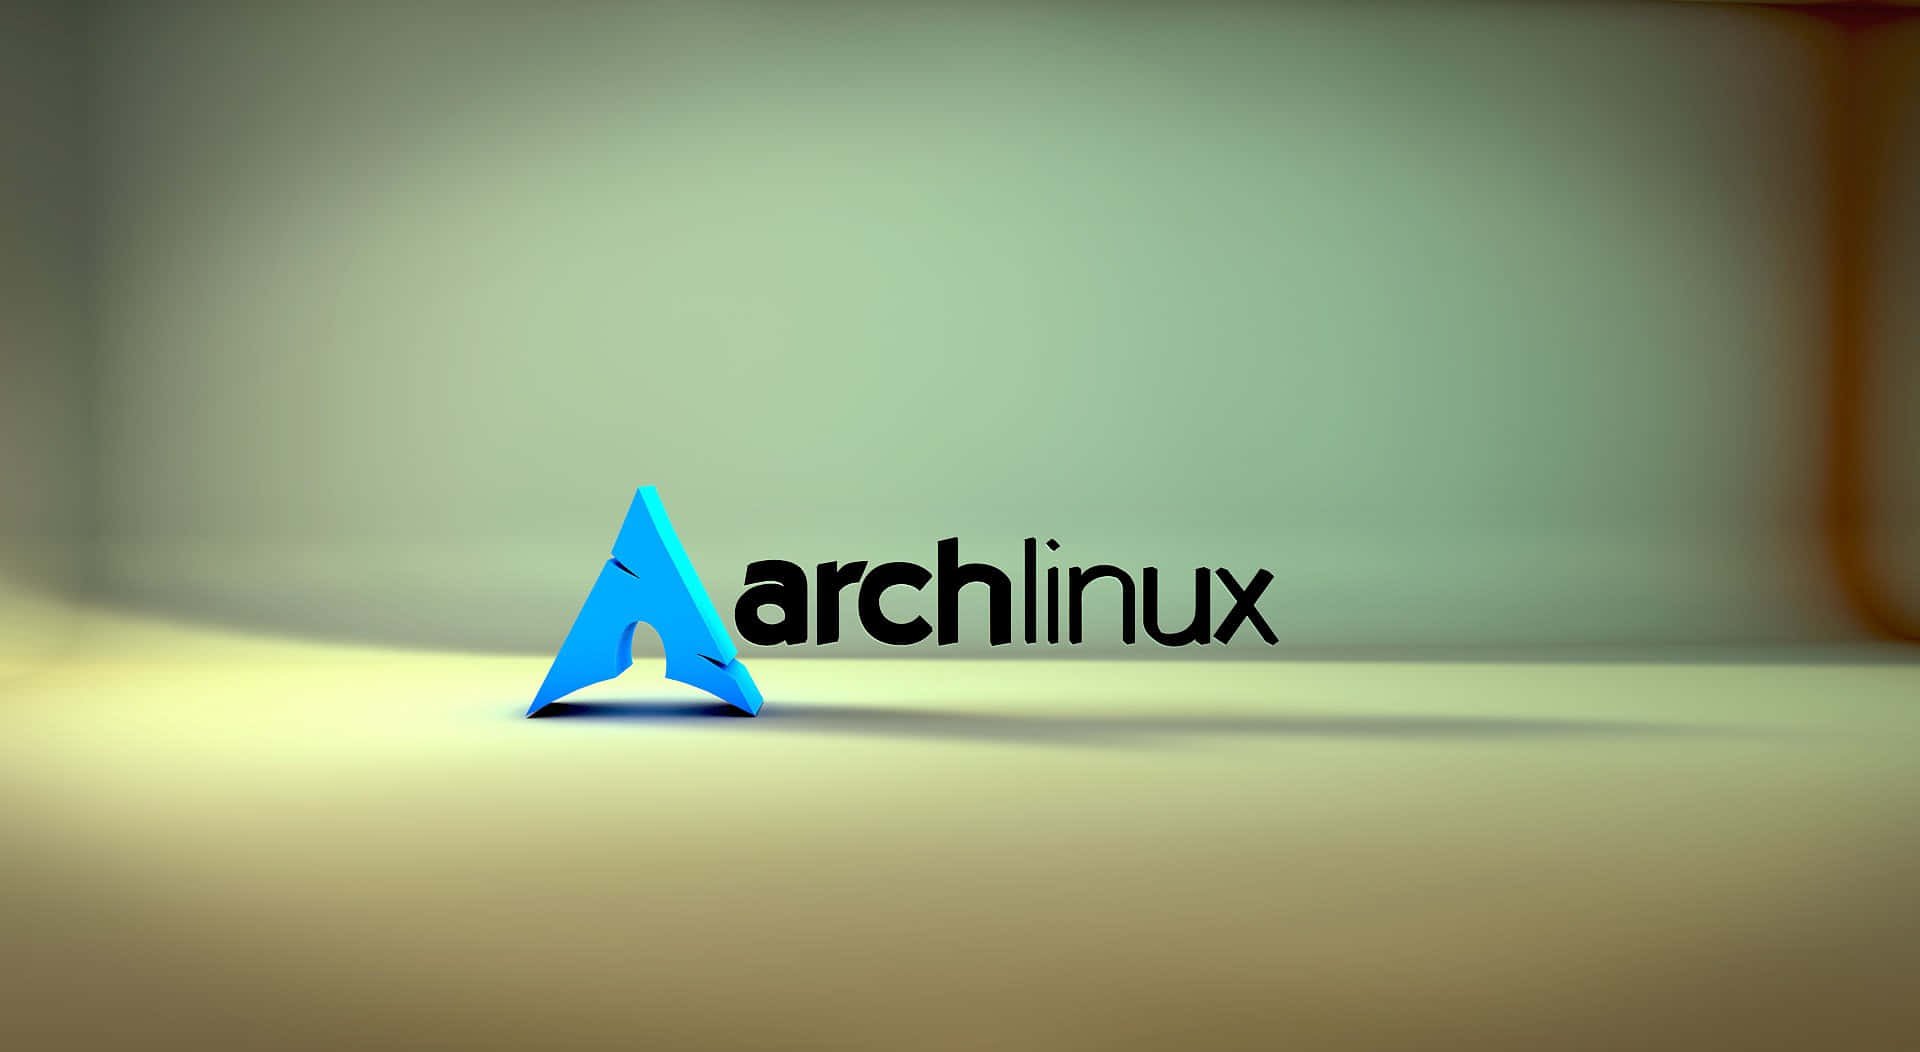 Arch Linux Wallpaper 86 images